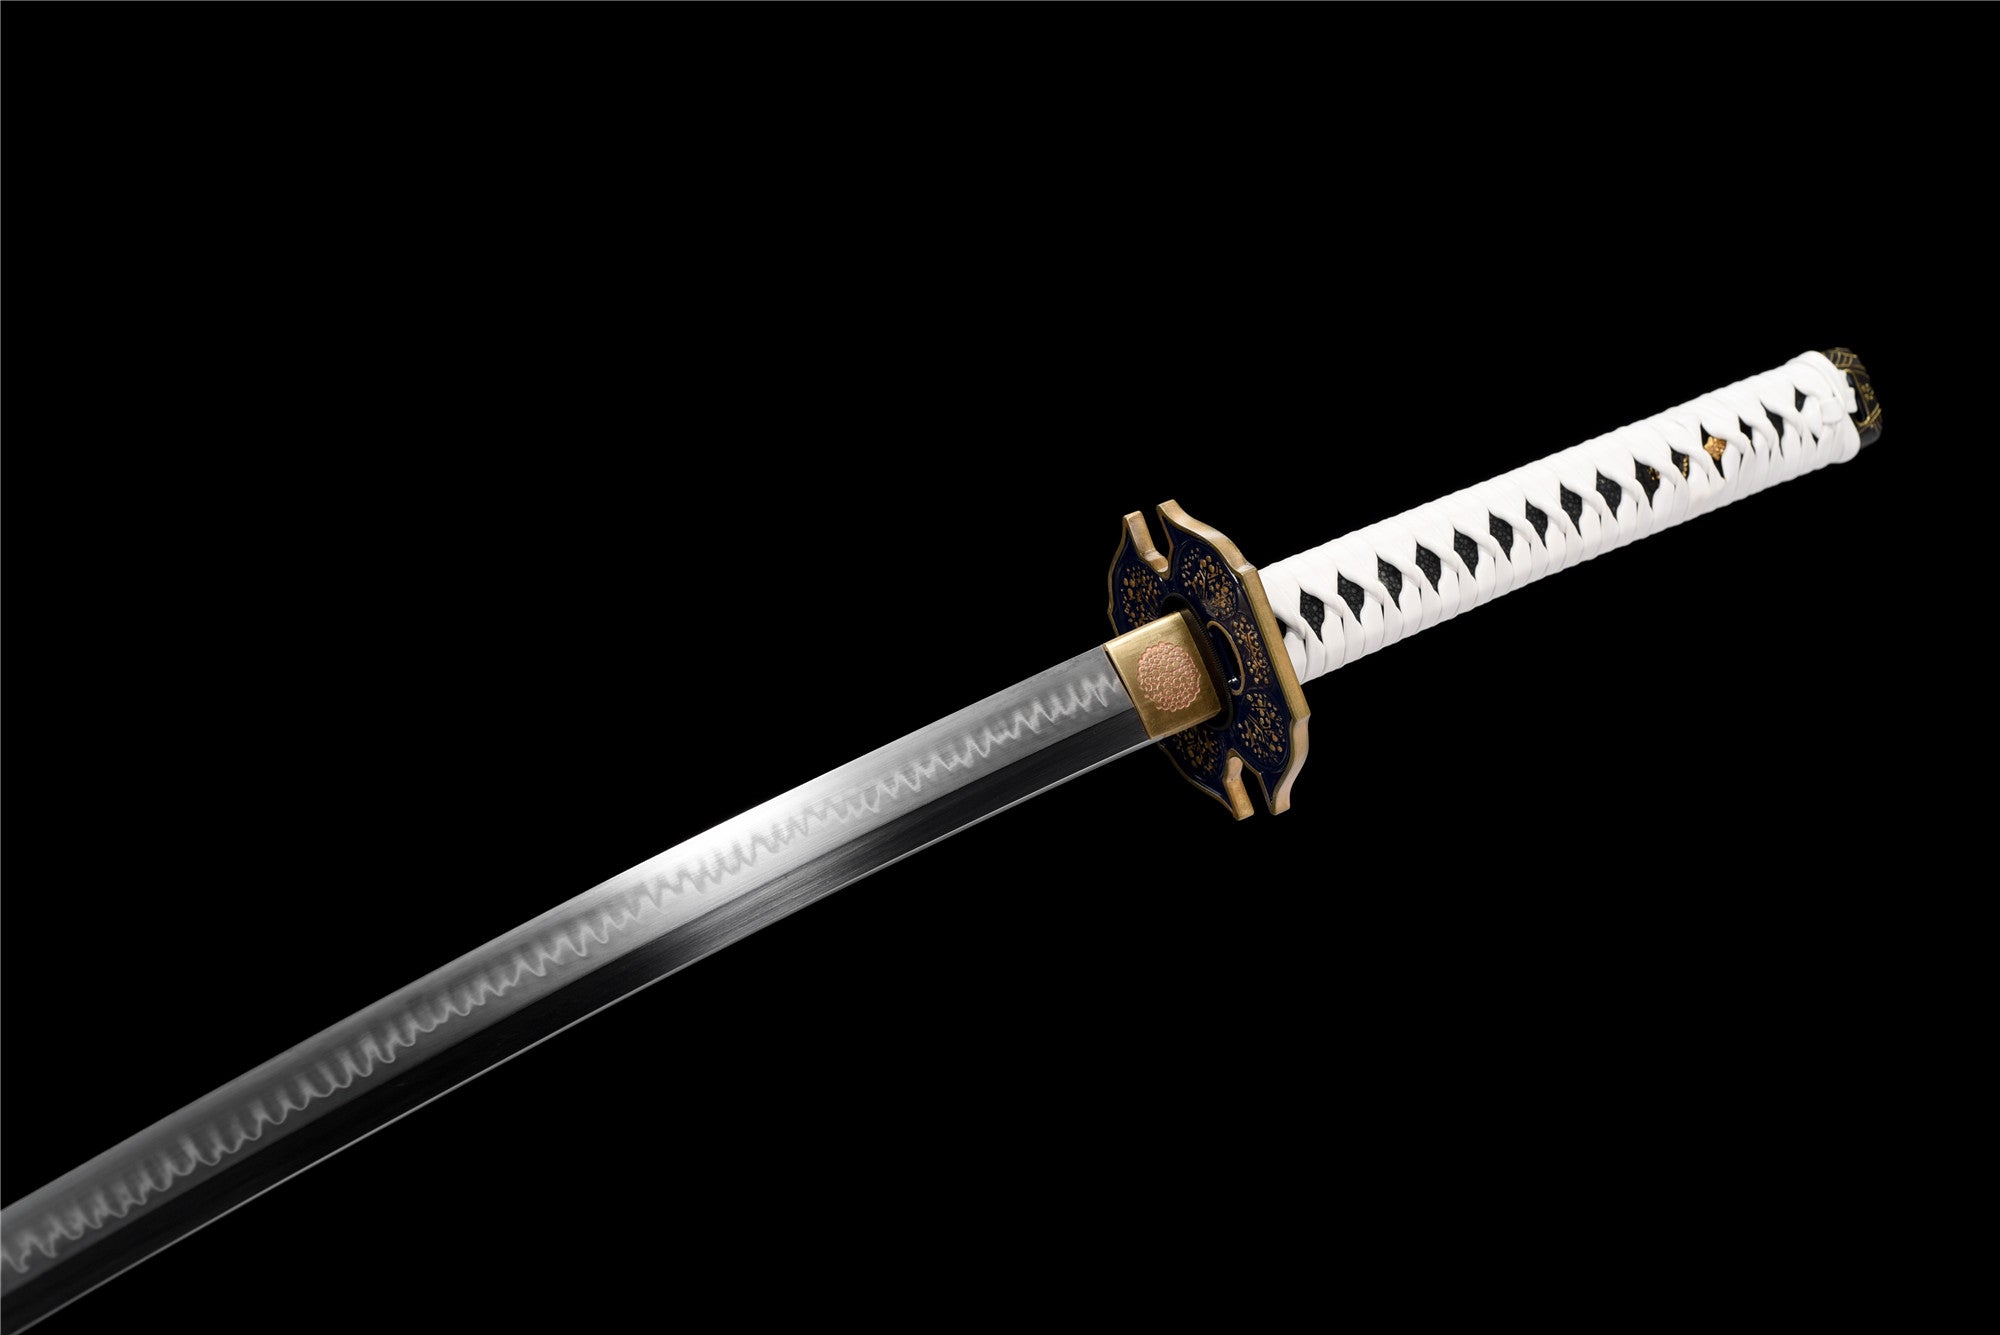 Anime Katana Sword,Devil May Cry 5 Anime Cosplay,Vergil’s Yamato Sword Real Handmade Japanese Samurai Sword,T10 Steel Clay Tempered With Hamon